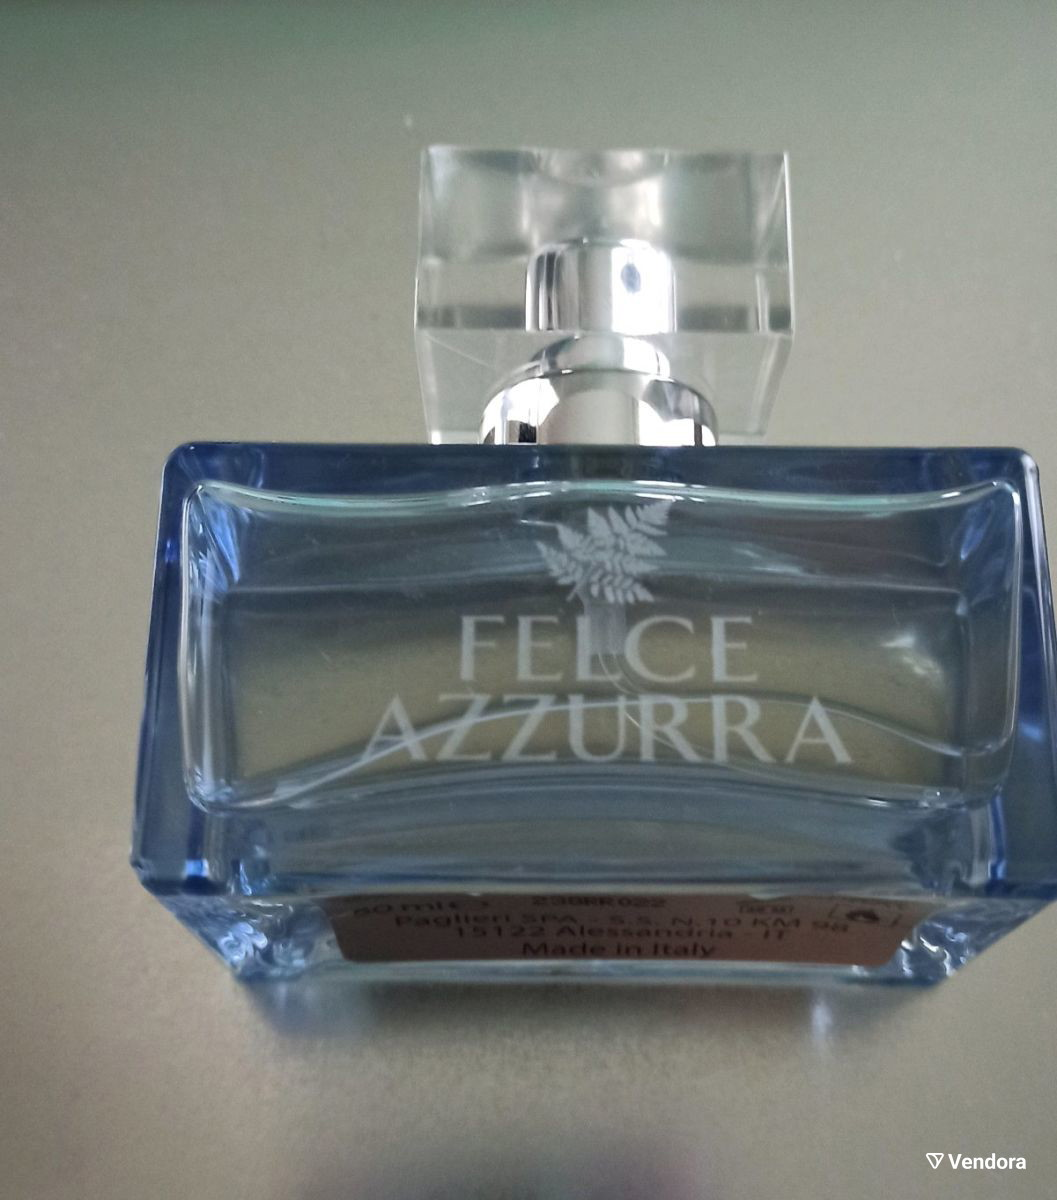 FELCE AZZURRA special edition , 50ml, sold… - € 35,00 - Vendora